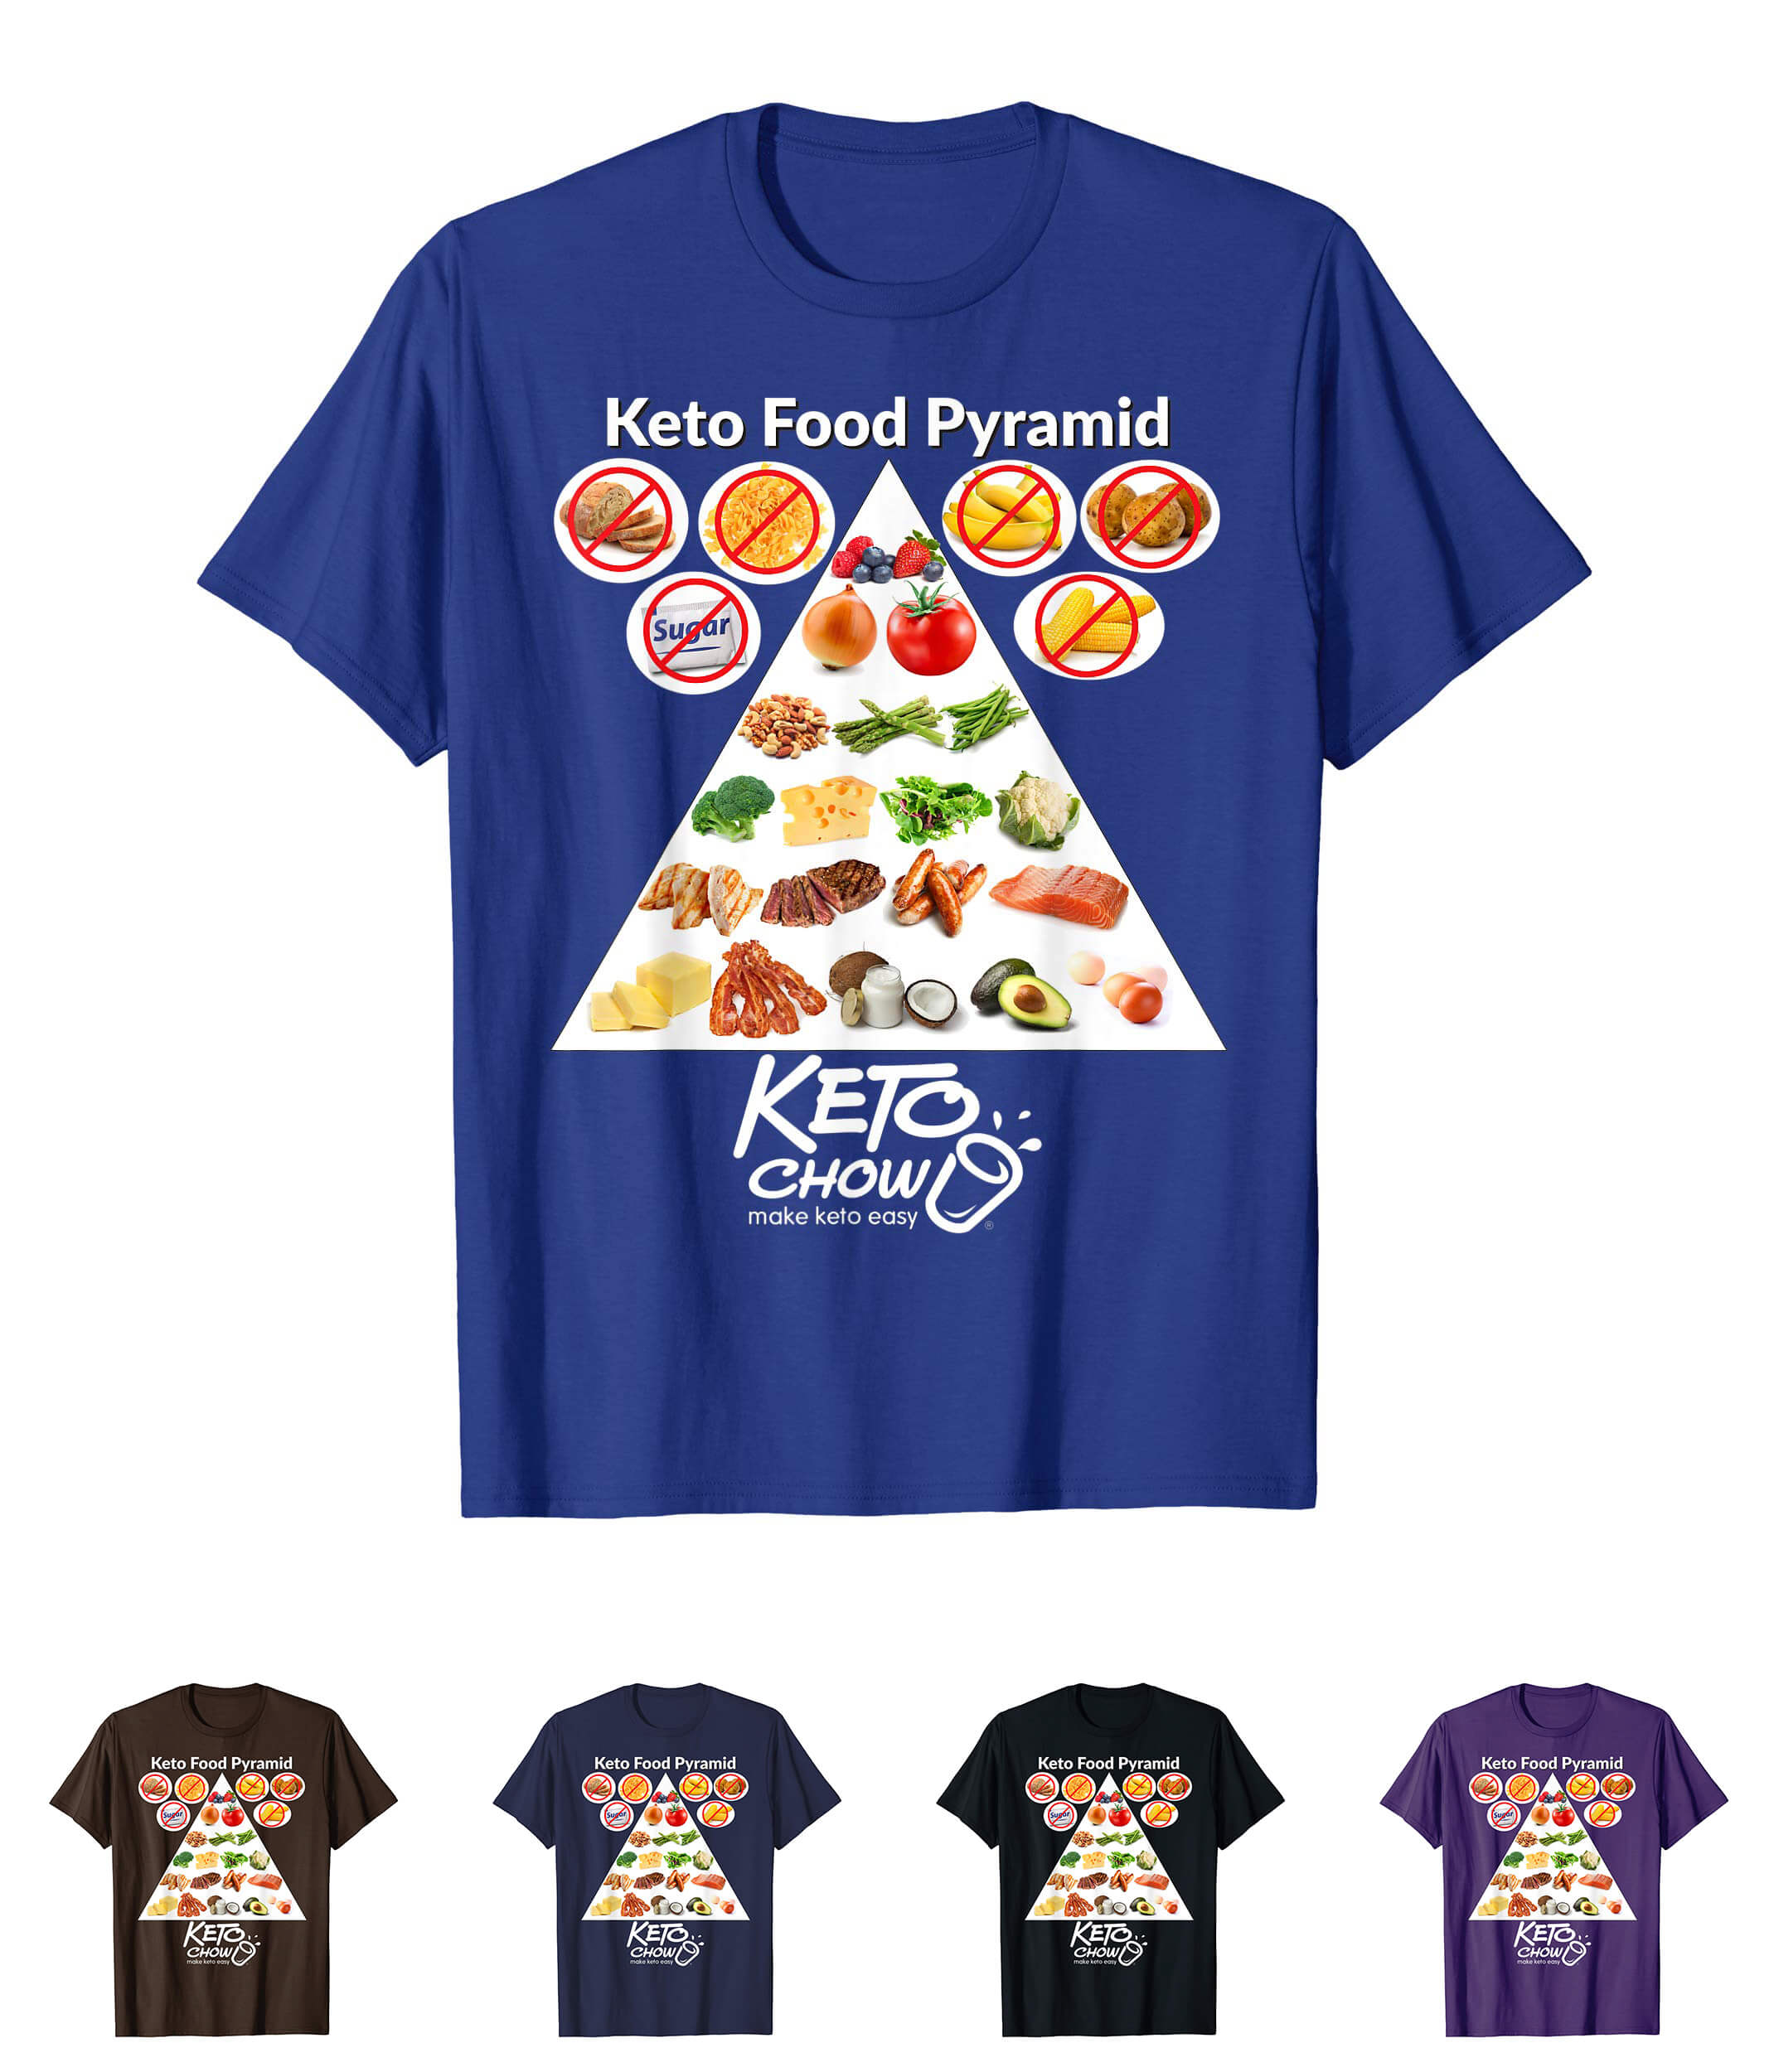 Keto food pyramid white logo dark colors t-shirt